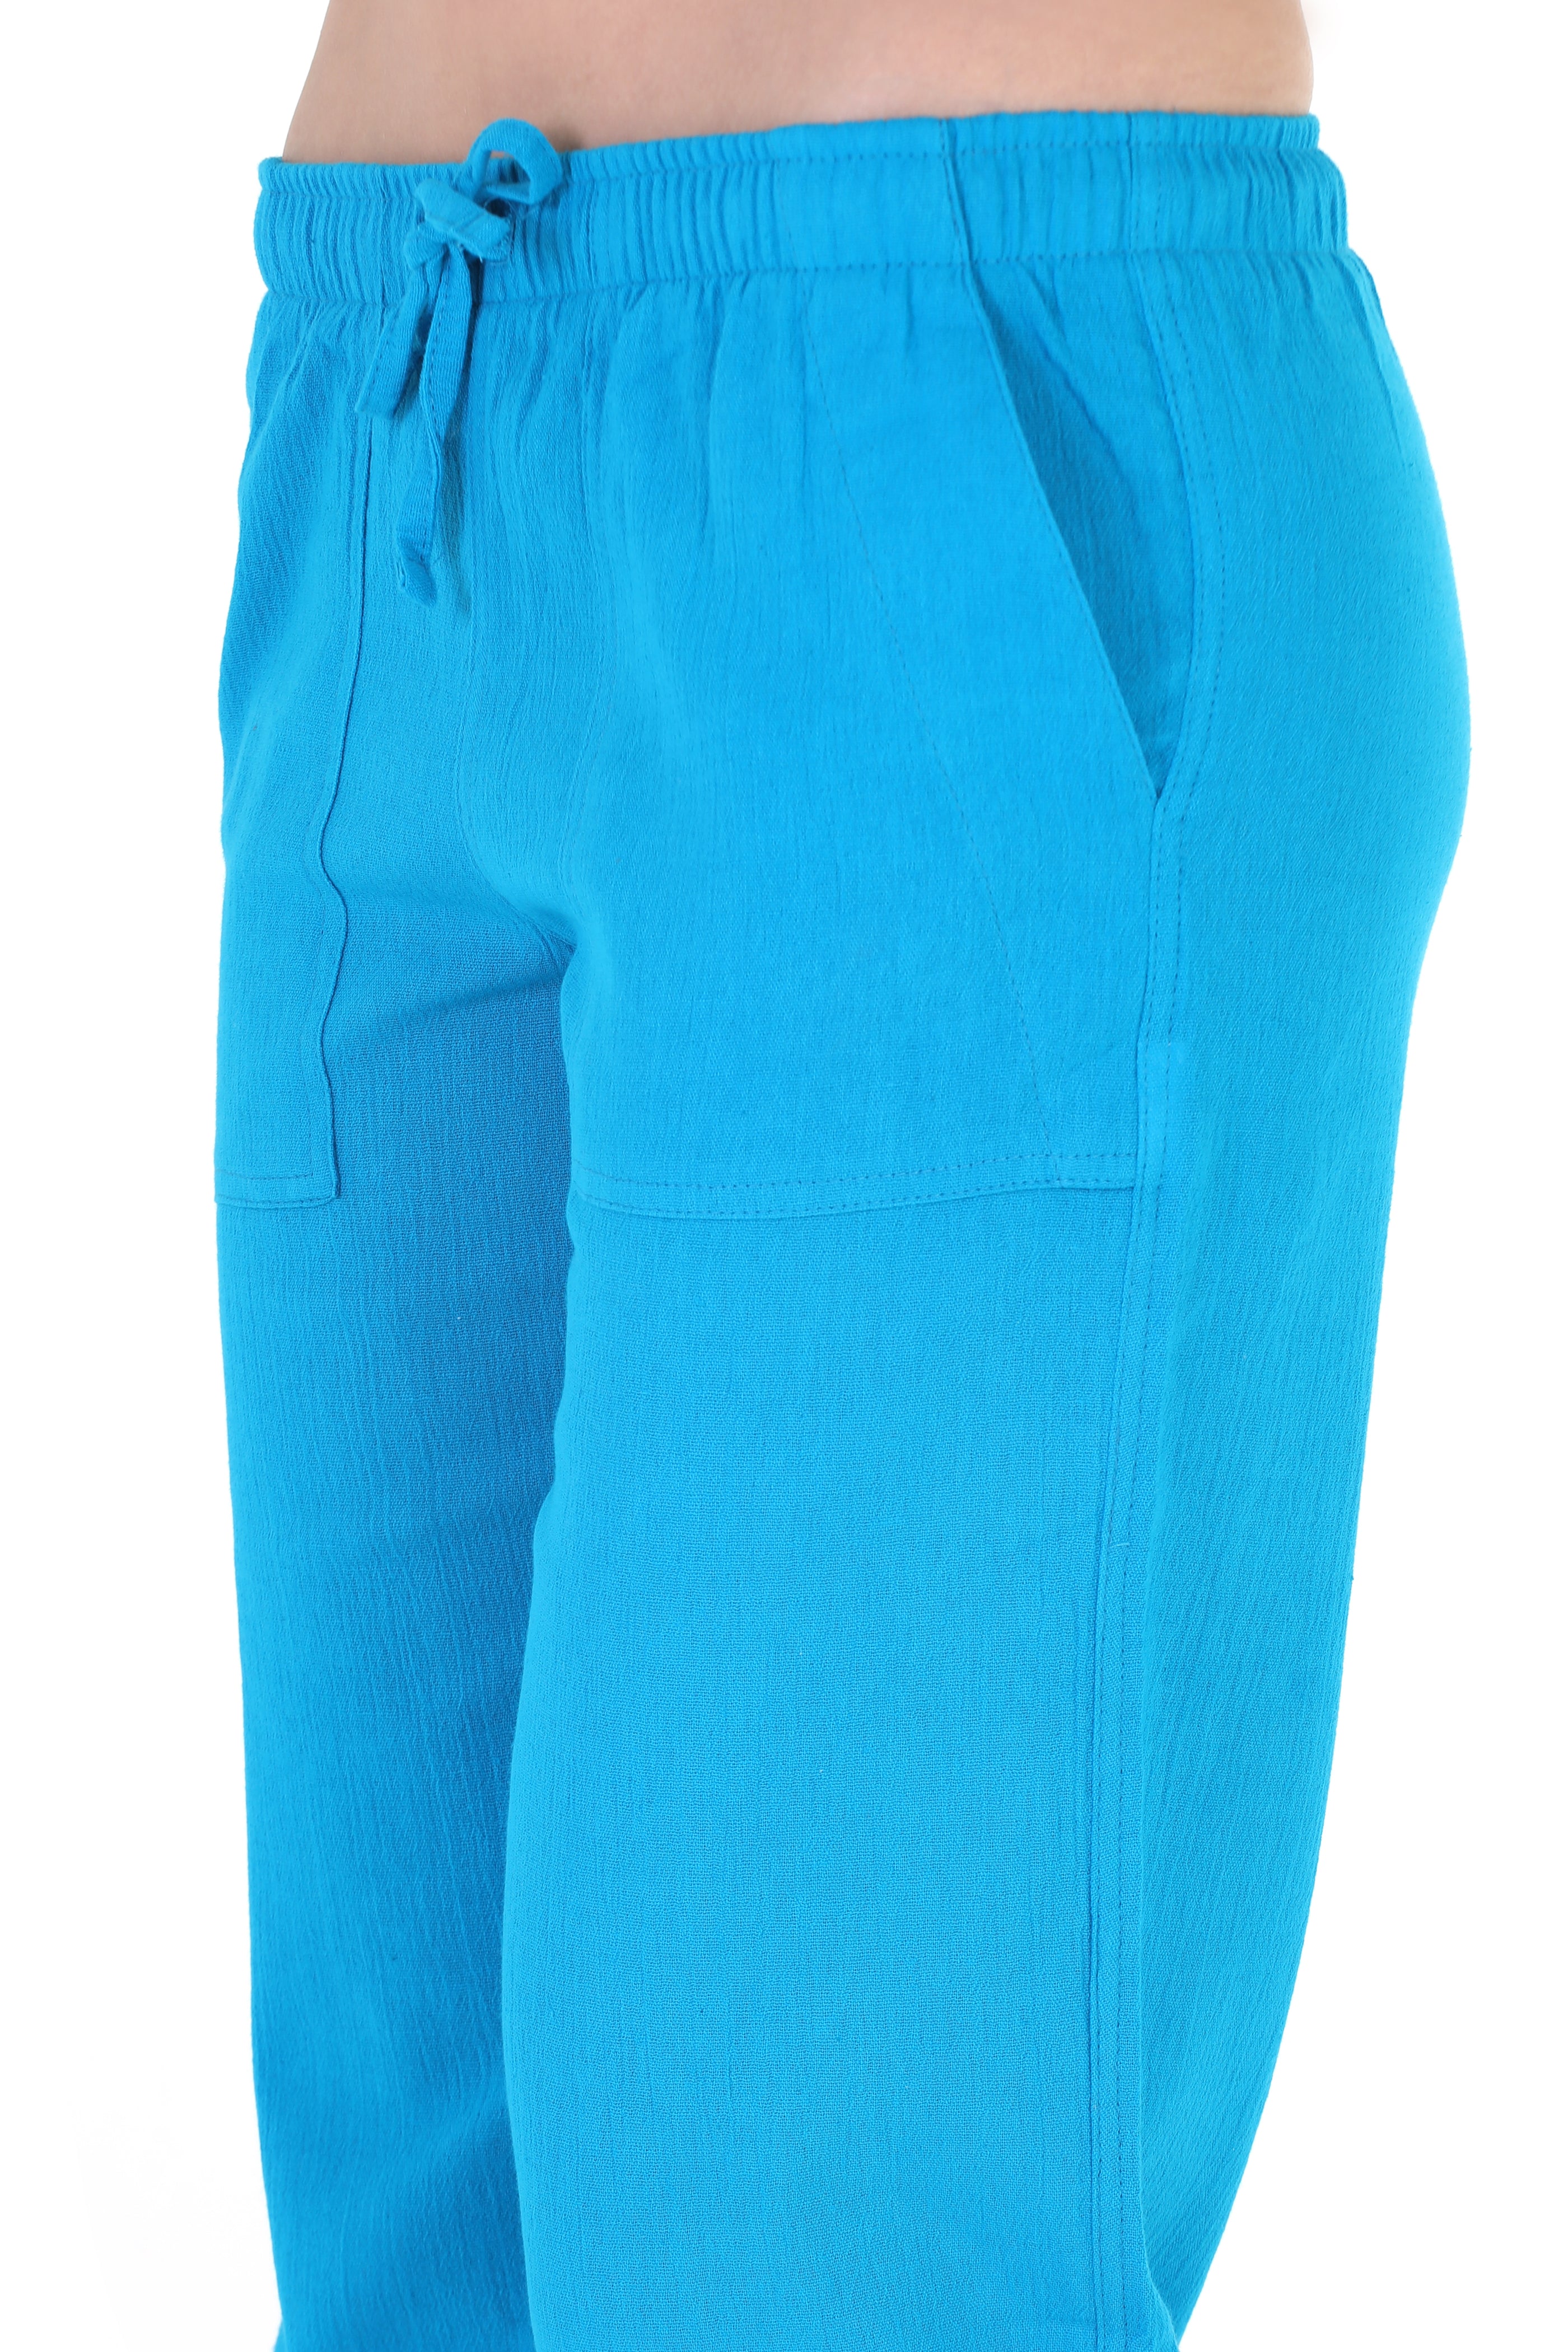 Women's Gauze Cotton Capri Beach Pants with Pockets